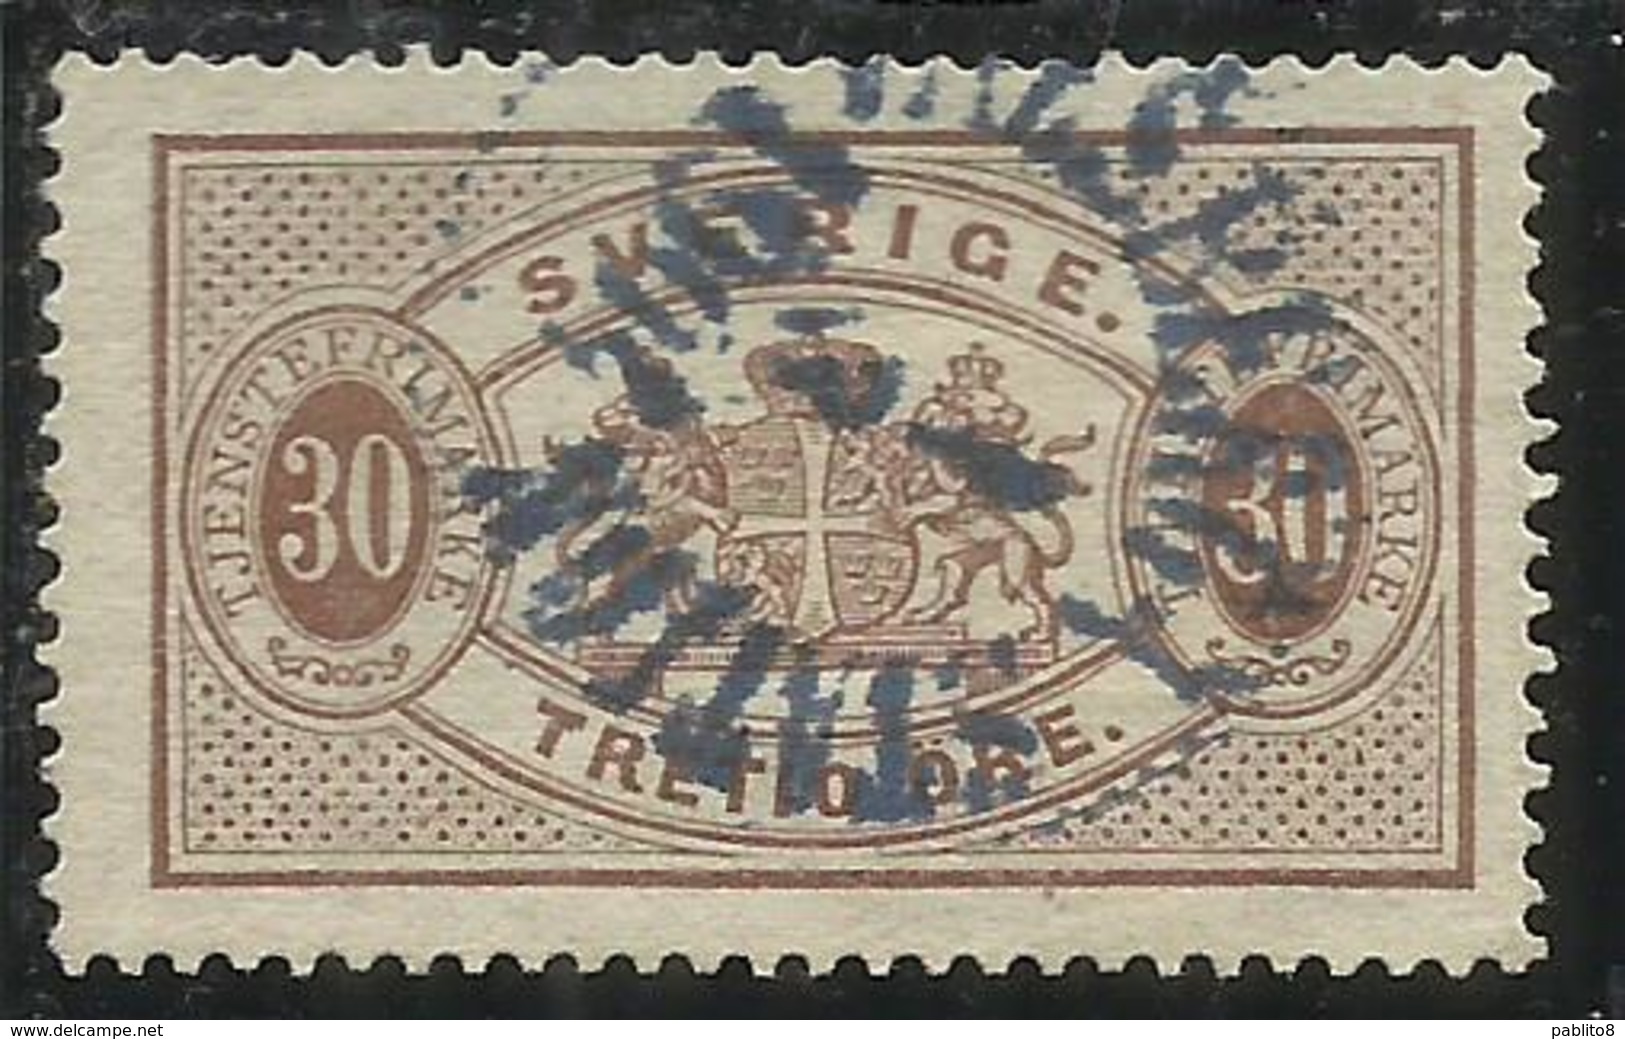 SWEDEN SVERIGE SVEZIA SUEDE 1874 1877 OFFICIAL STAMPS ORE 30o USATO USED OBLITERE' - Fiscales